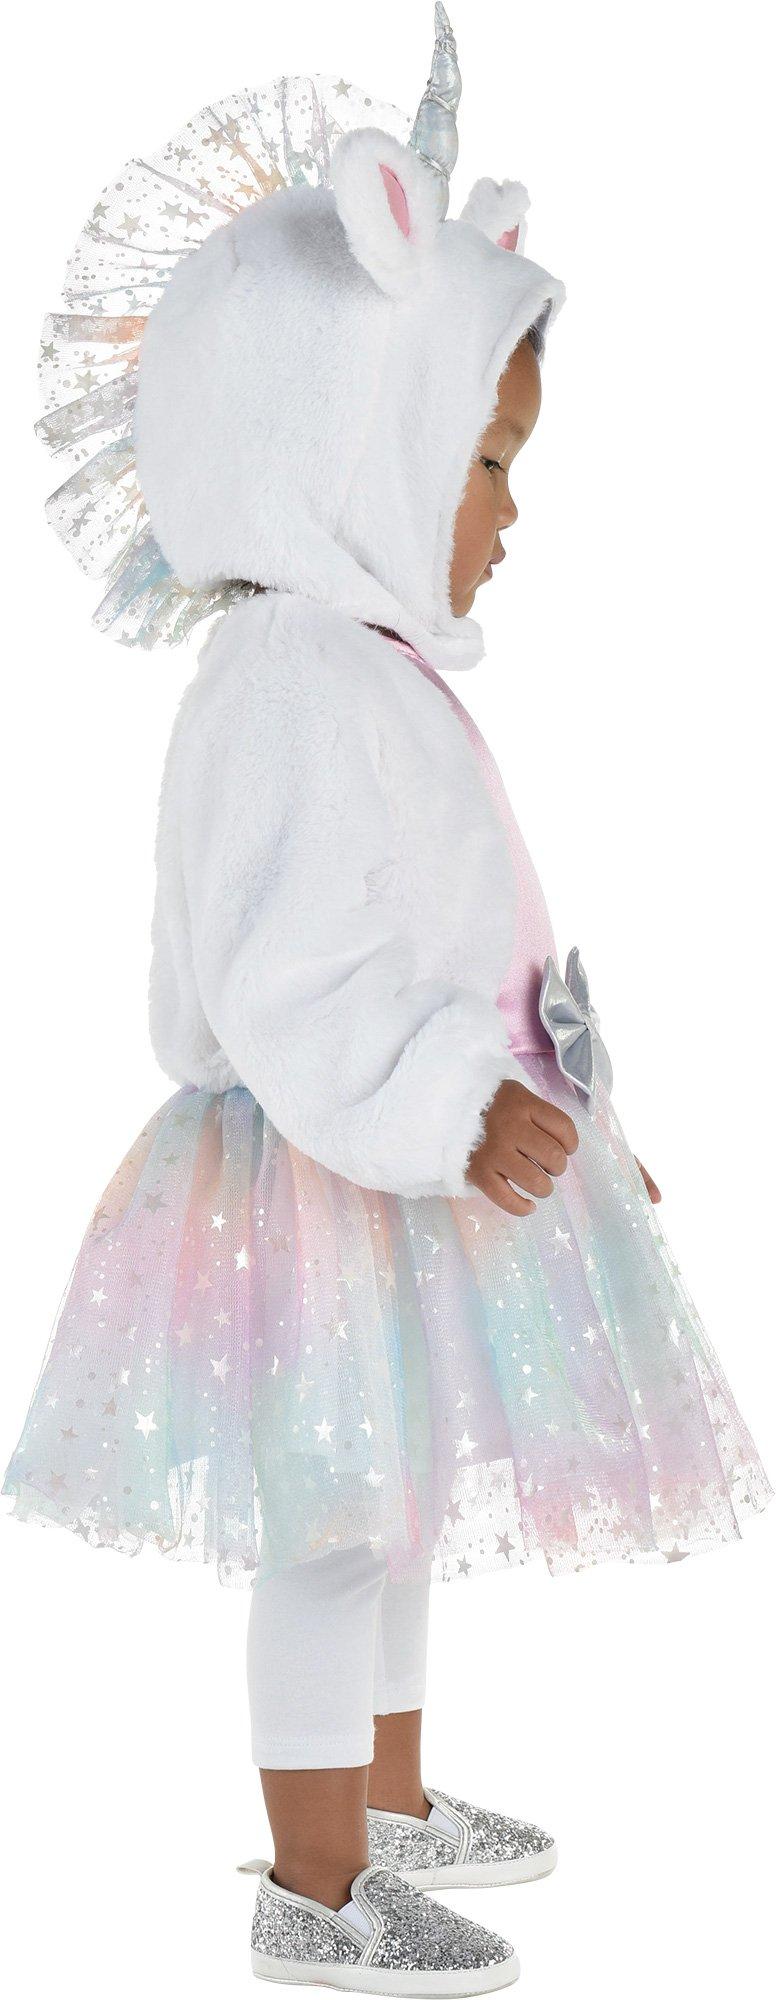 Kids' Magical Tutu Unicorn Costume